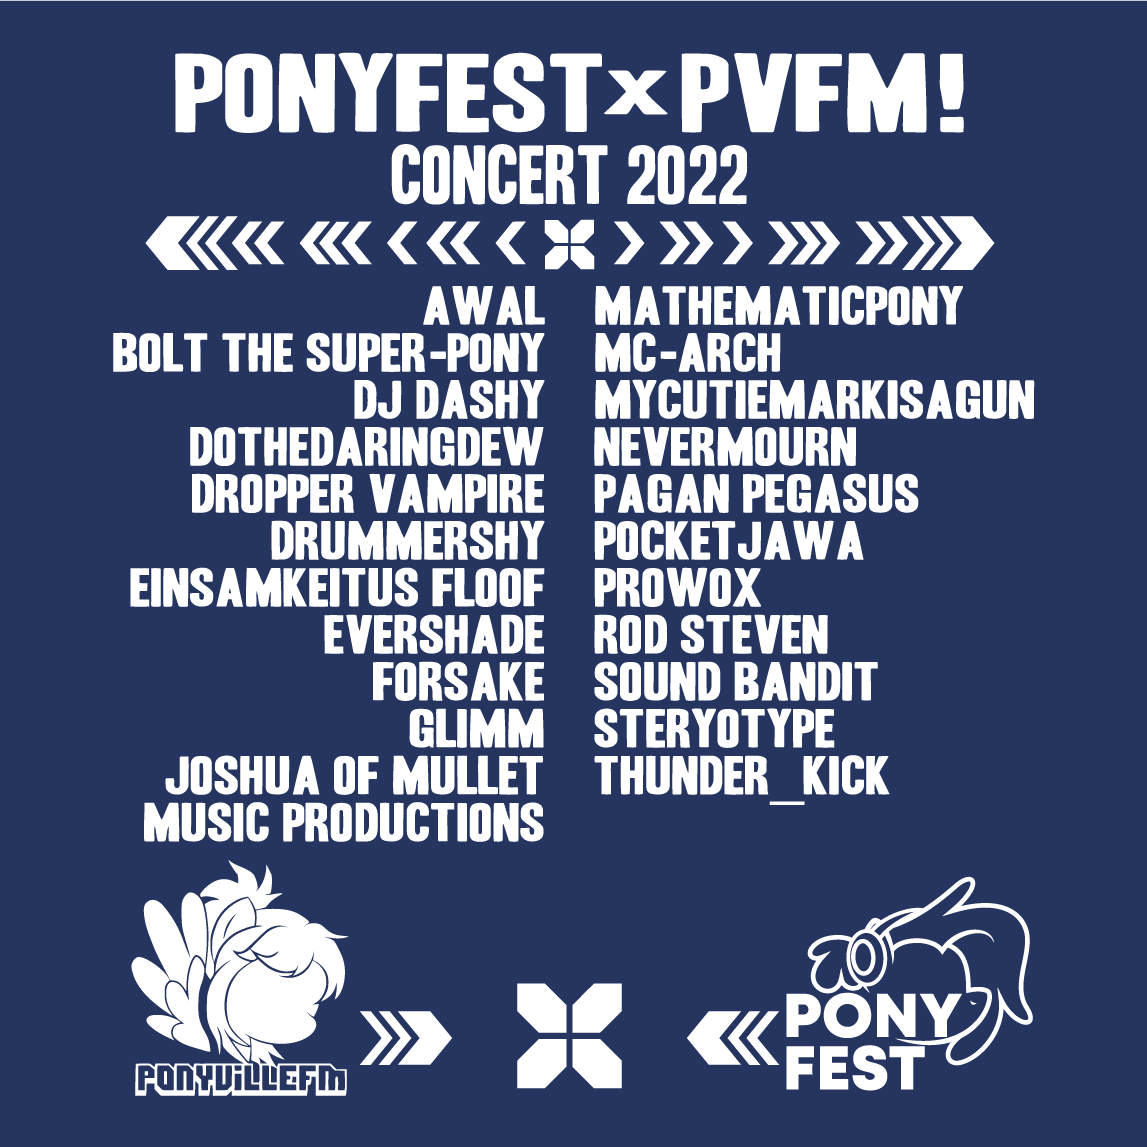 PonyFest × PVFM Concert 2022 - The Trevor Project Fundraiser shirt design - zoomed